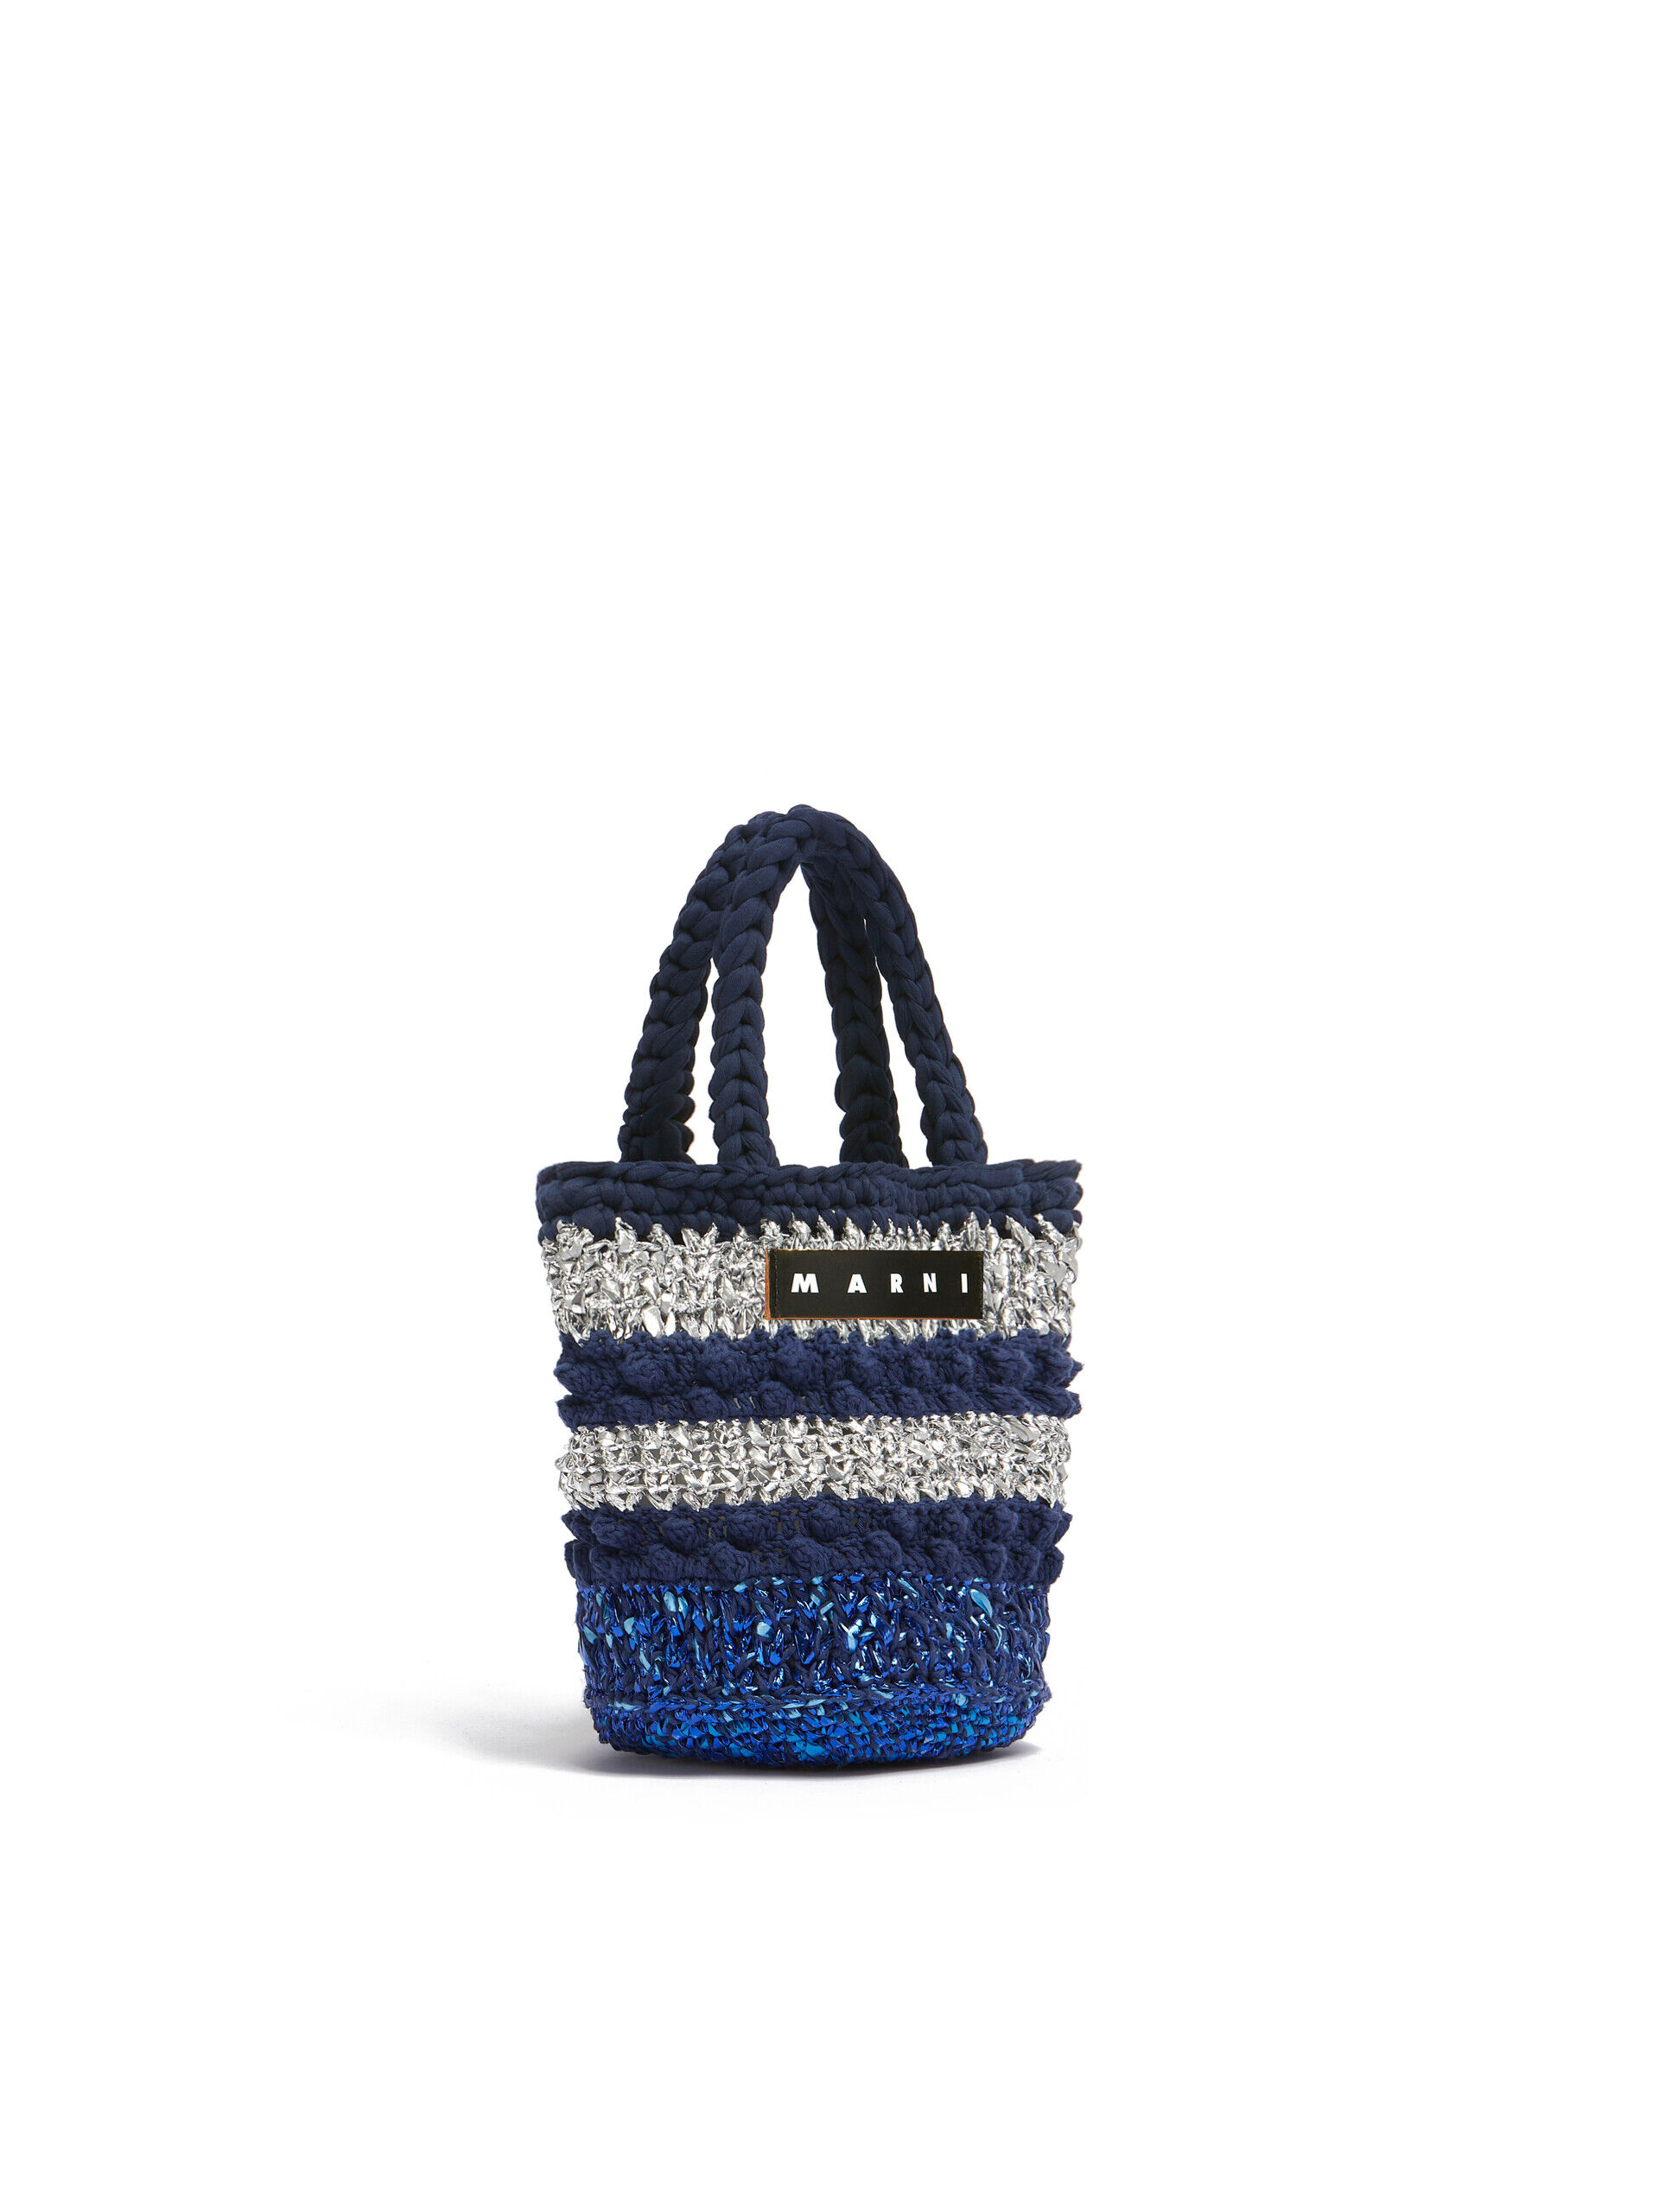 Deep blue and silver bobble-knit MARNI MARKET BUCKET bag | Marni